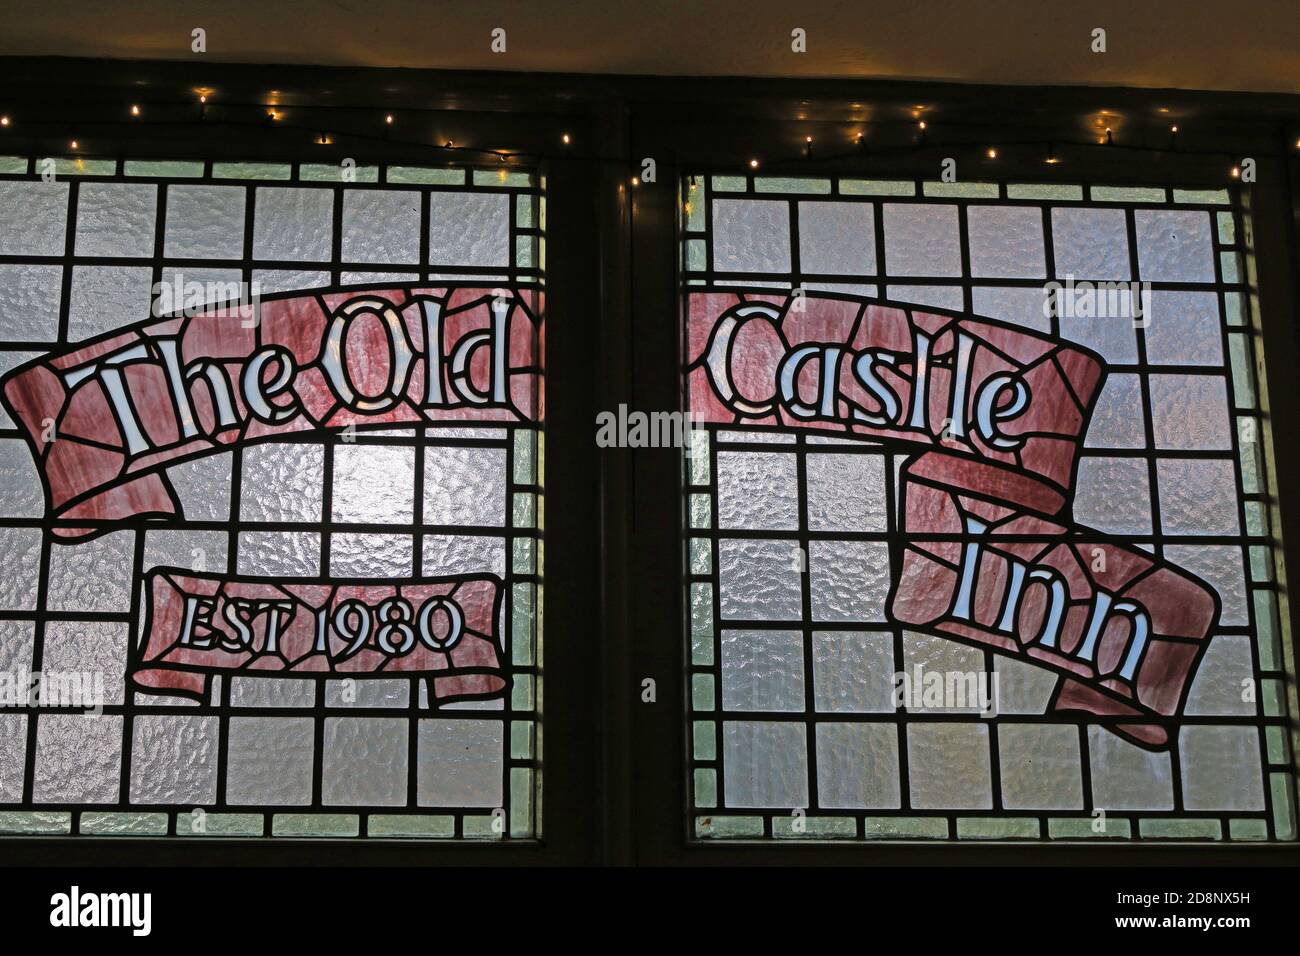 The Old Castle Inn, Ales tradicional, vidrieras,1980,en un bar/pub,Nottingham,centro de la ciudad,Nottinghamshire, Inglaterra,Reino Unido Foto de stock